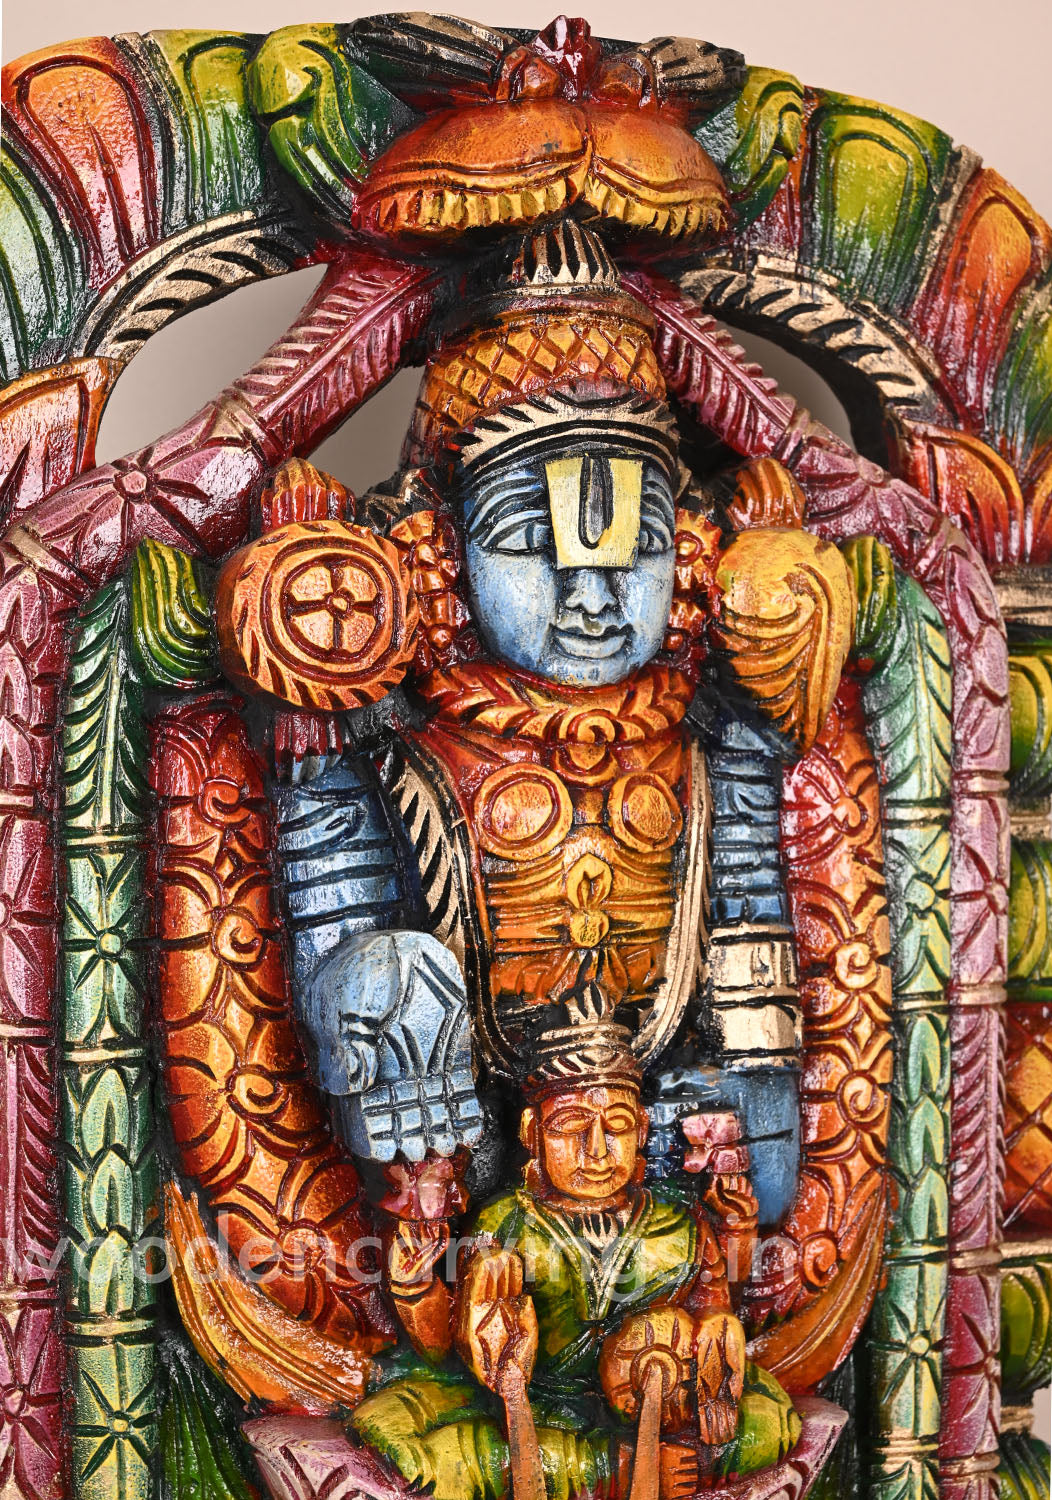 Venkatajalapathy with Shri MahaLakshmi Coloured Sculpture 20"